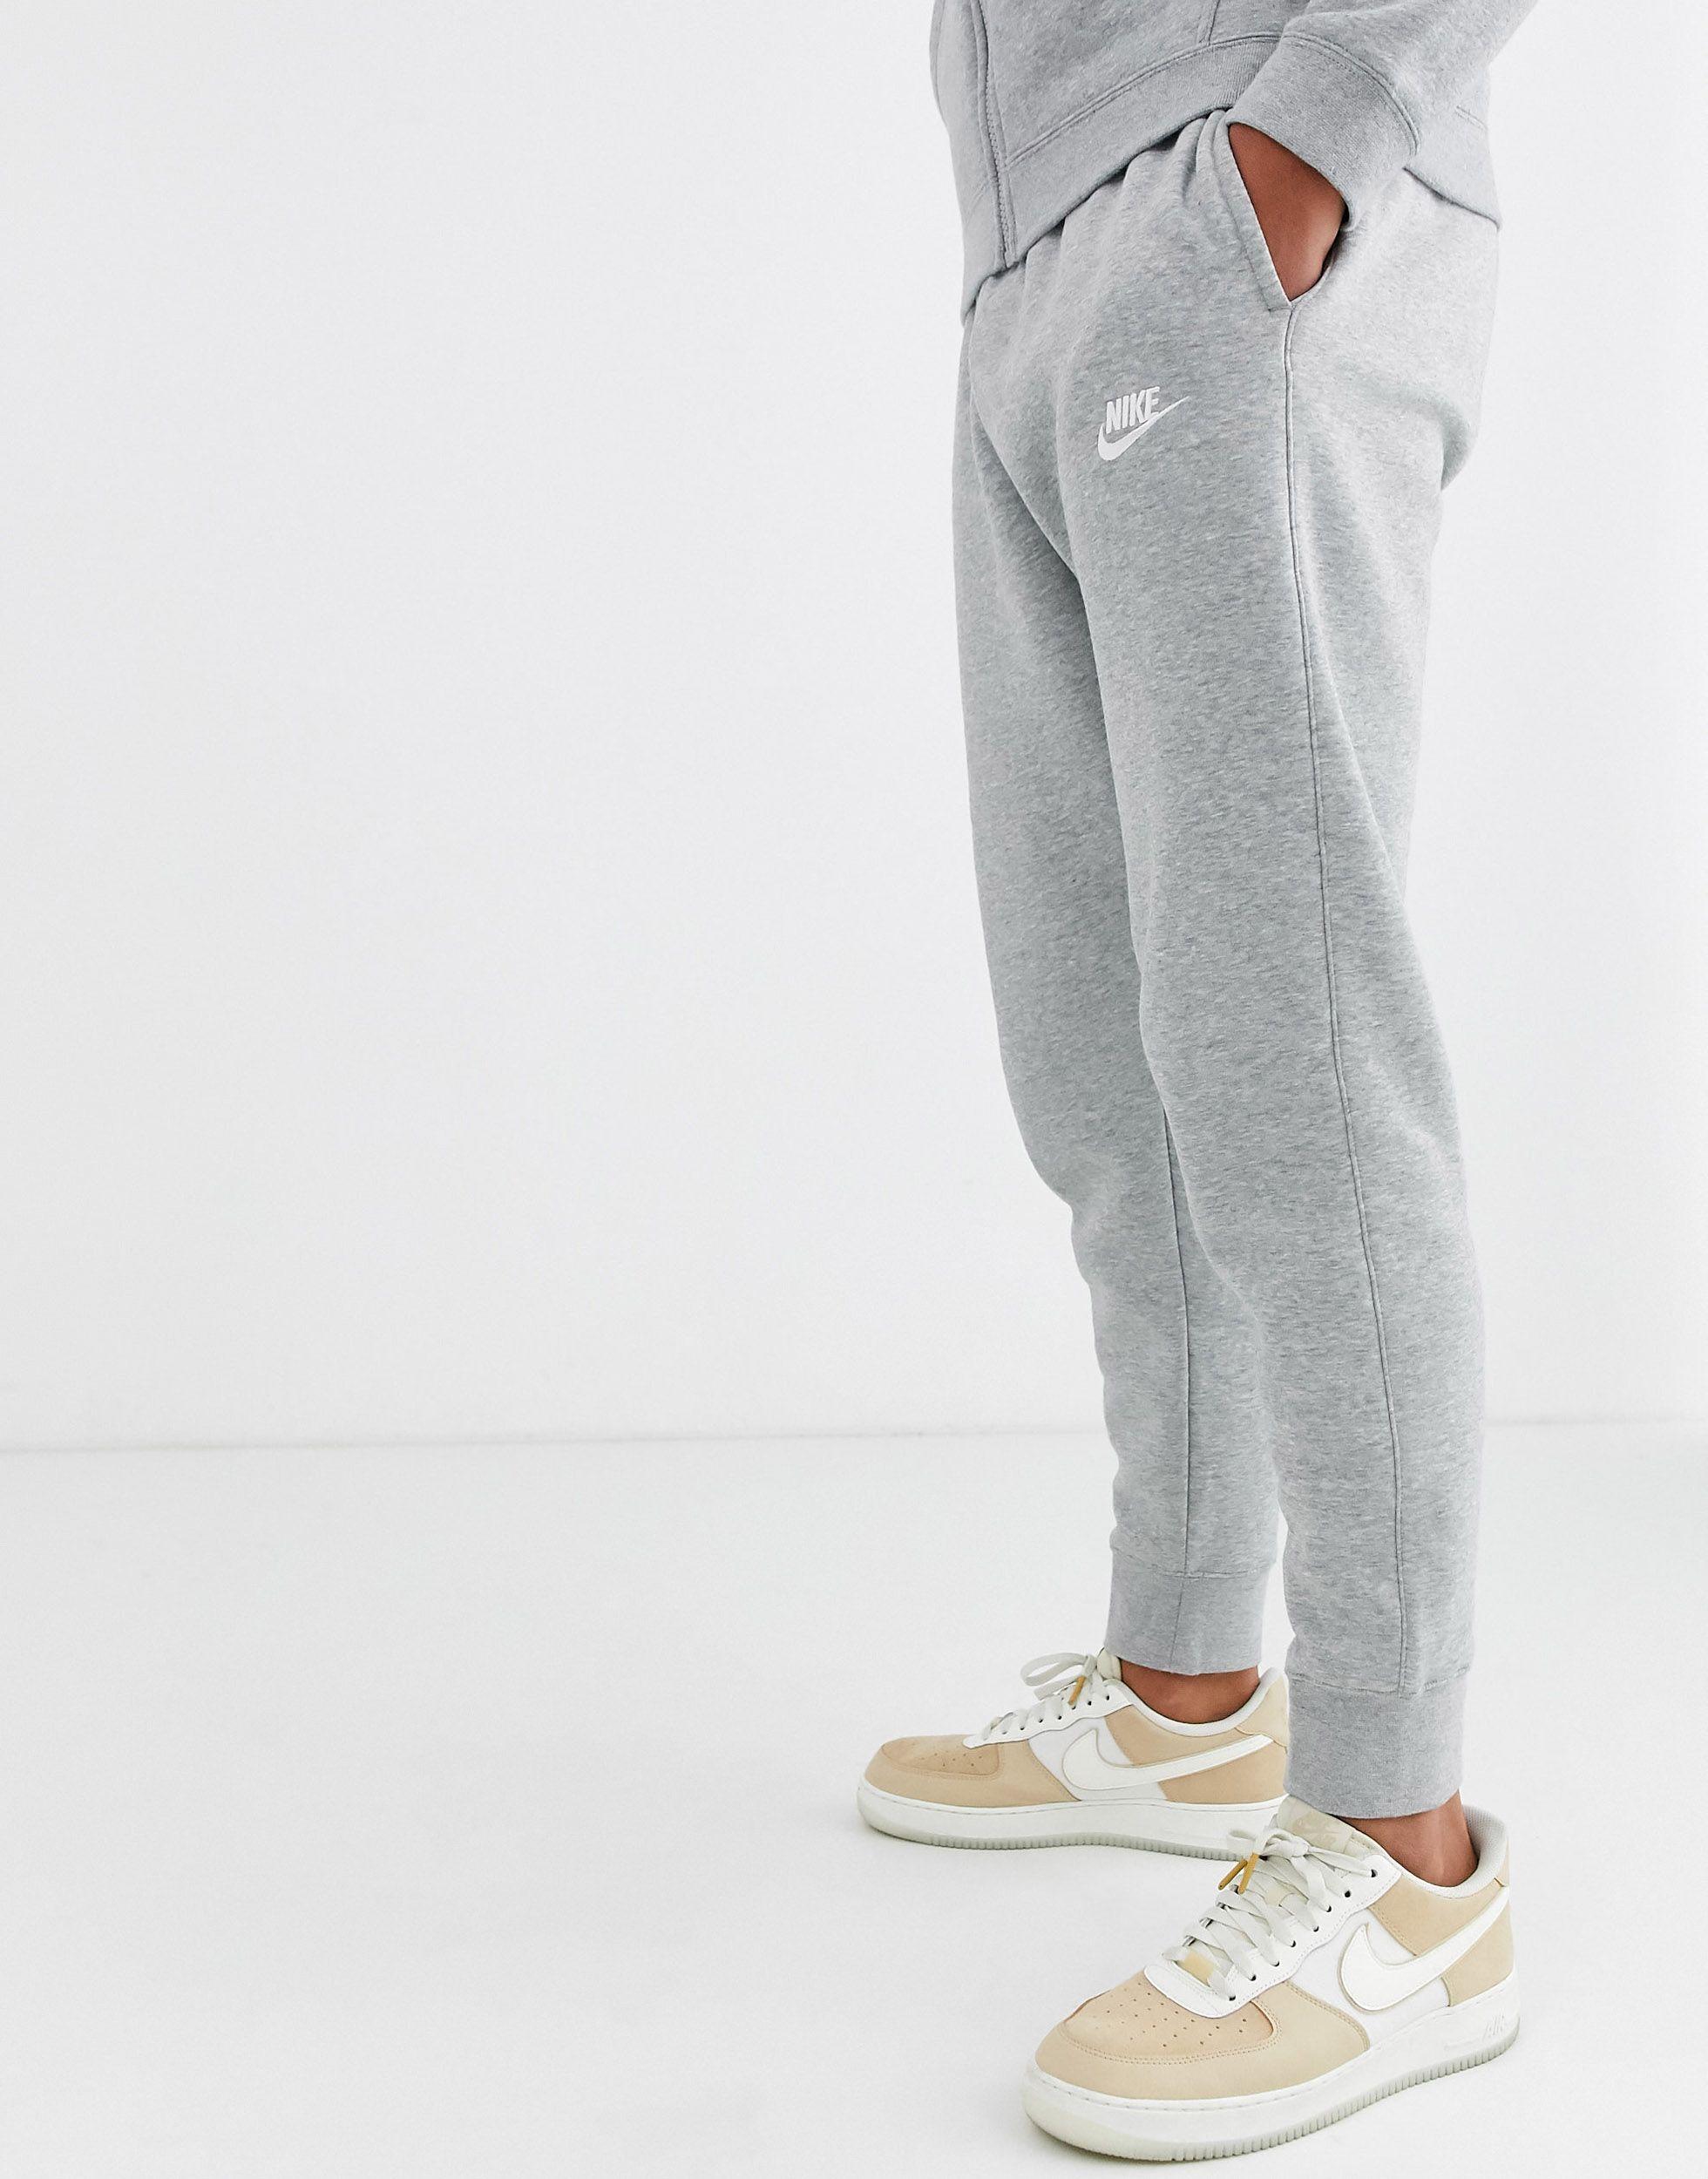 Nike Cotton Club Cuffed Sweatpants in Grey (Gray) for Men - Lyst